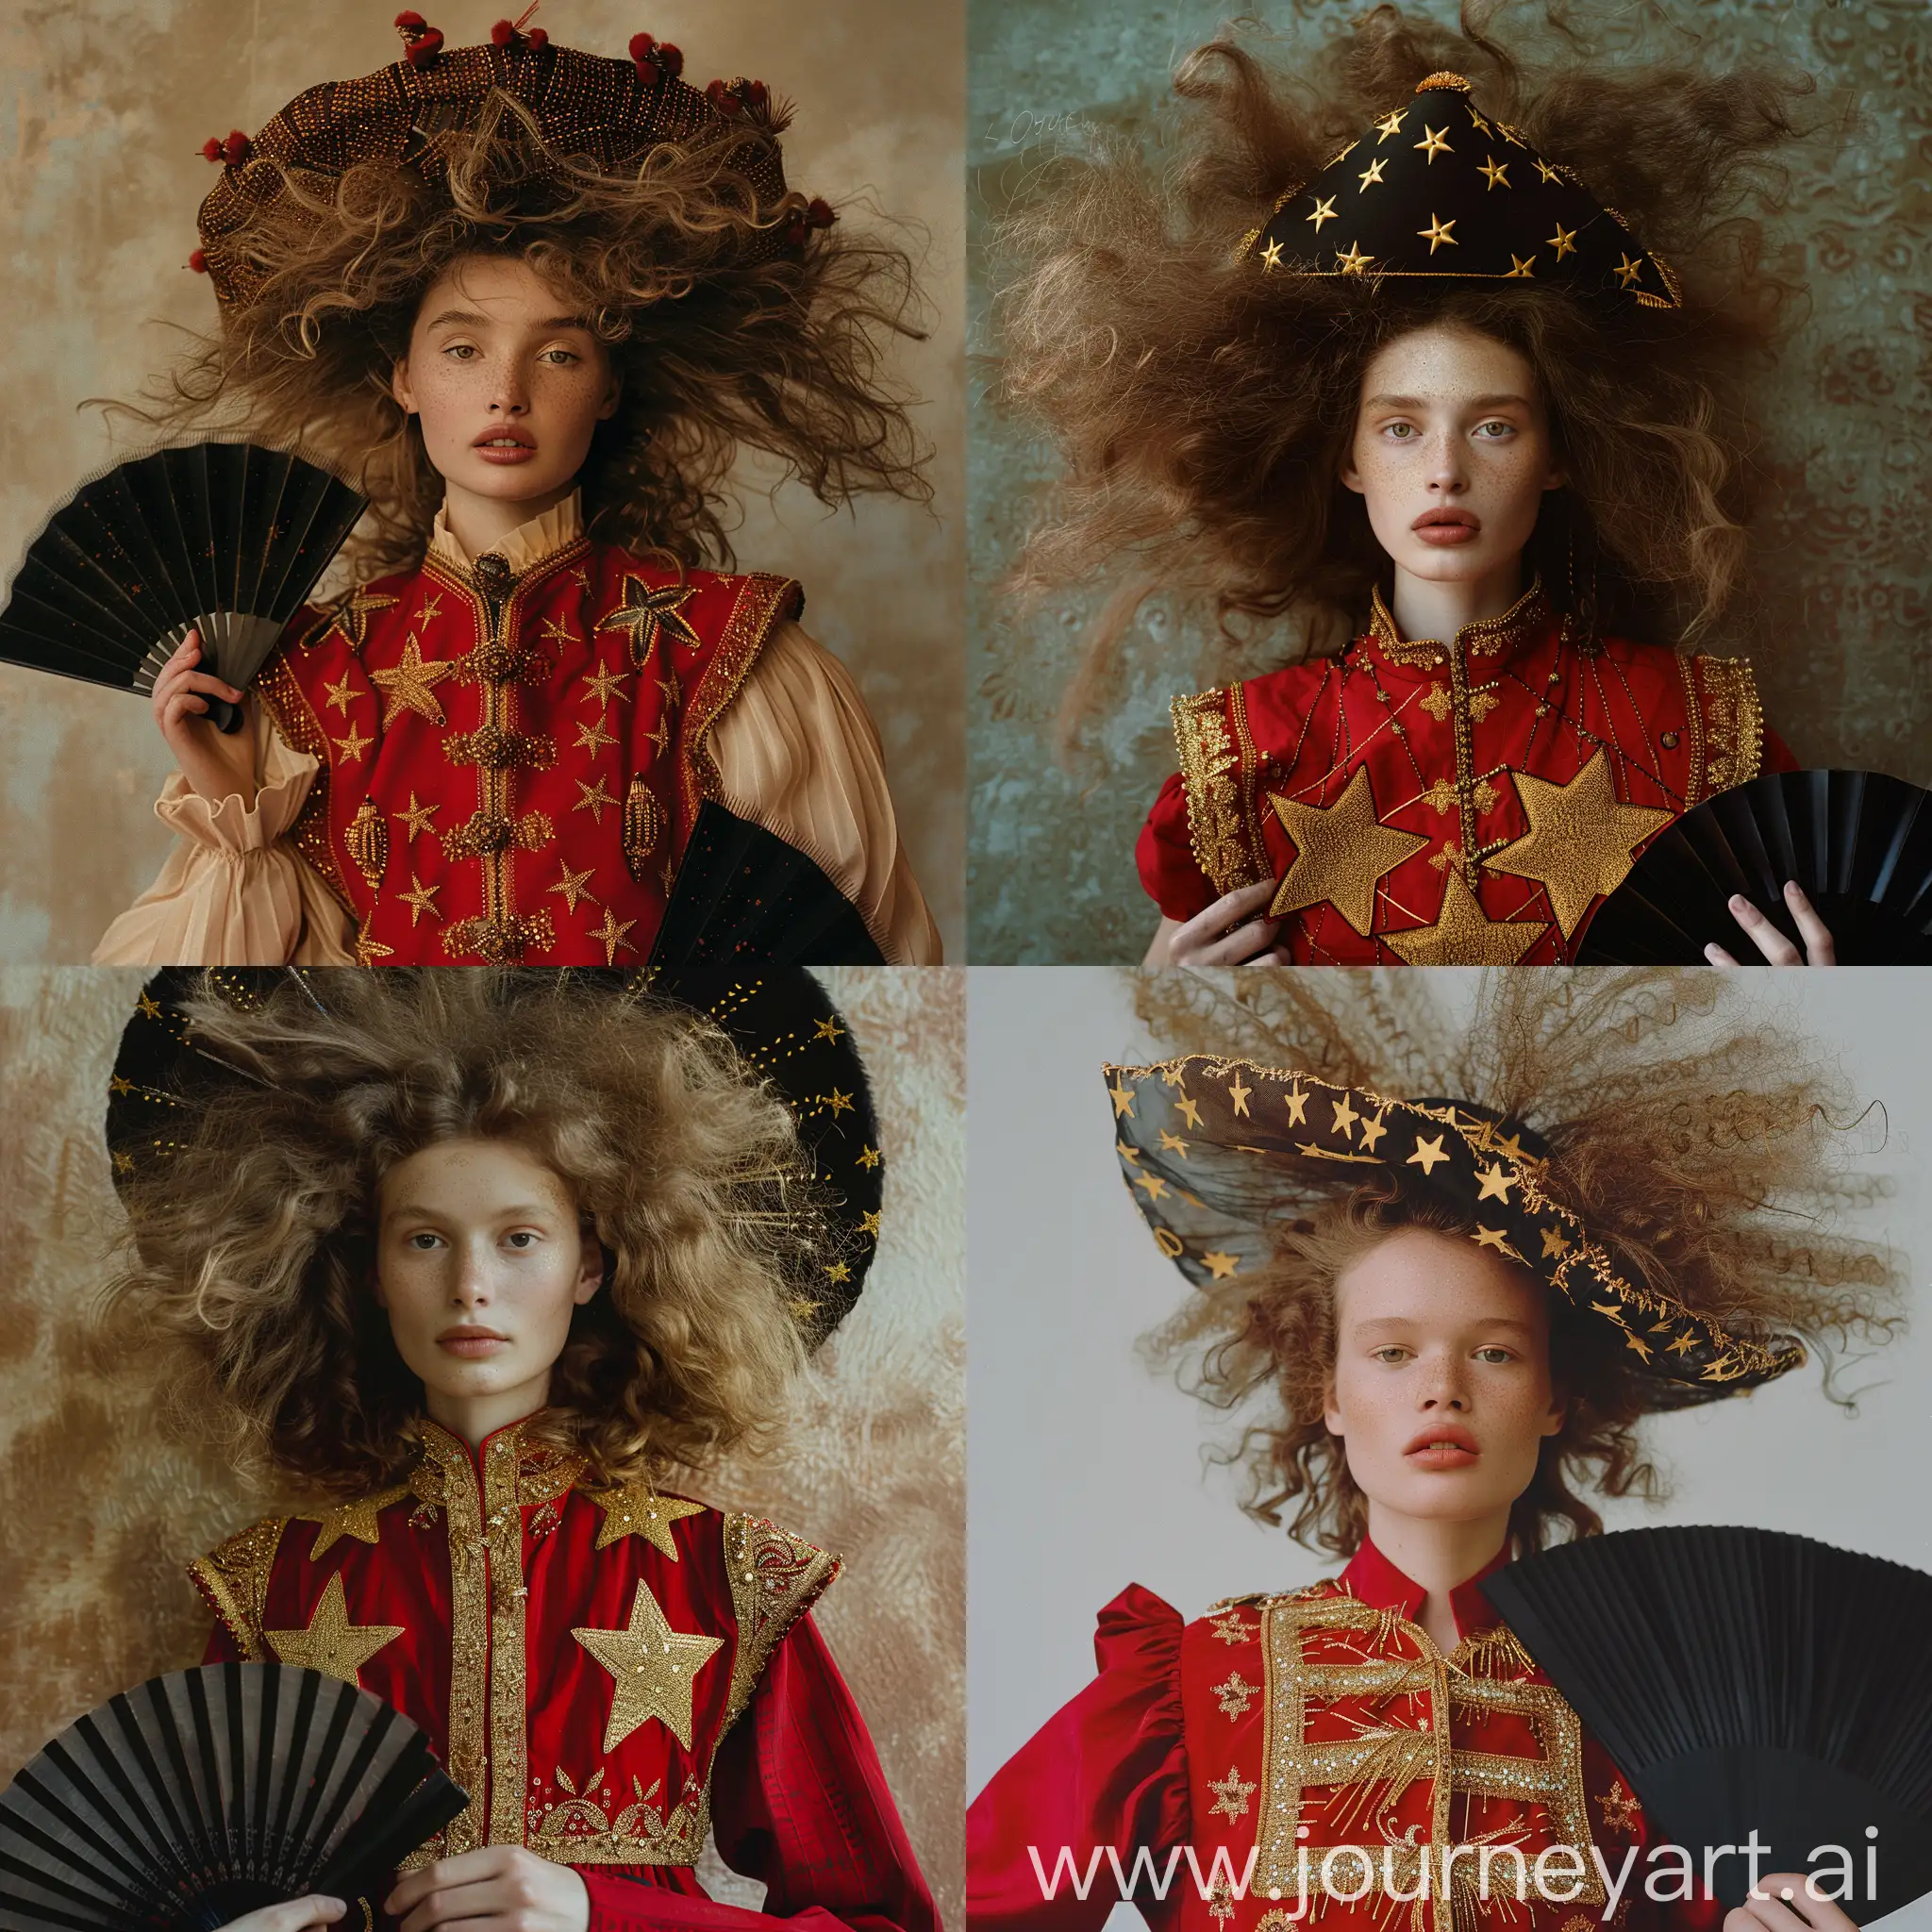 Spanish-Matador-Fashion-Glamorous-Model-with-Voluminous-Hair-and-Red-Vest